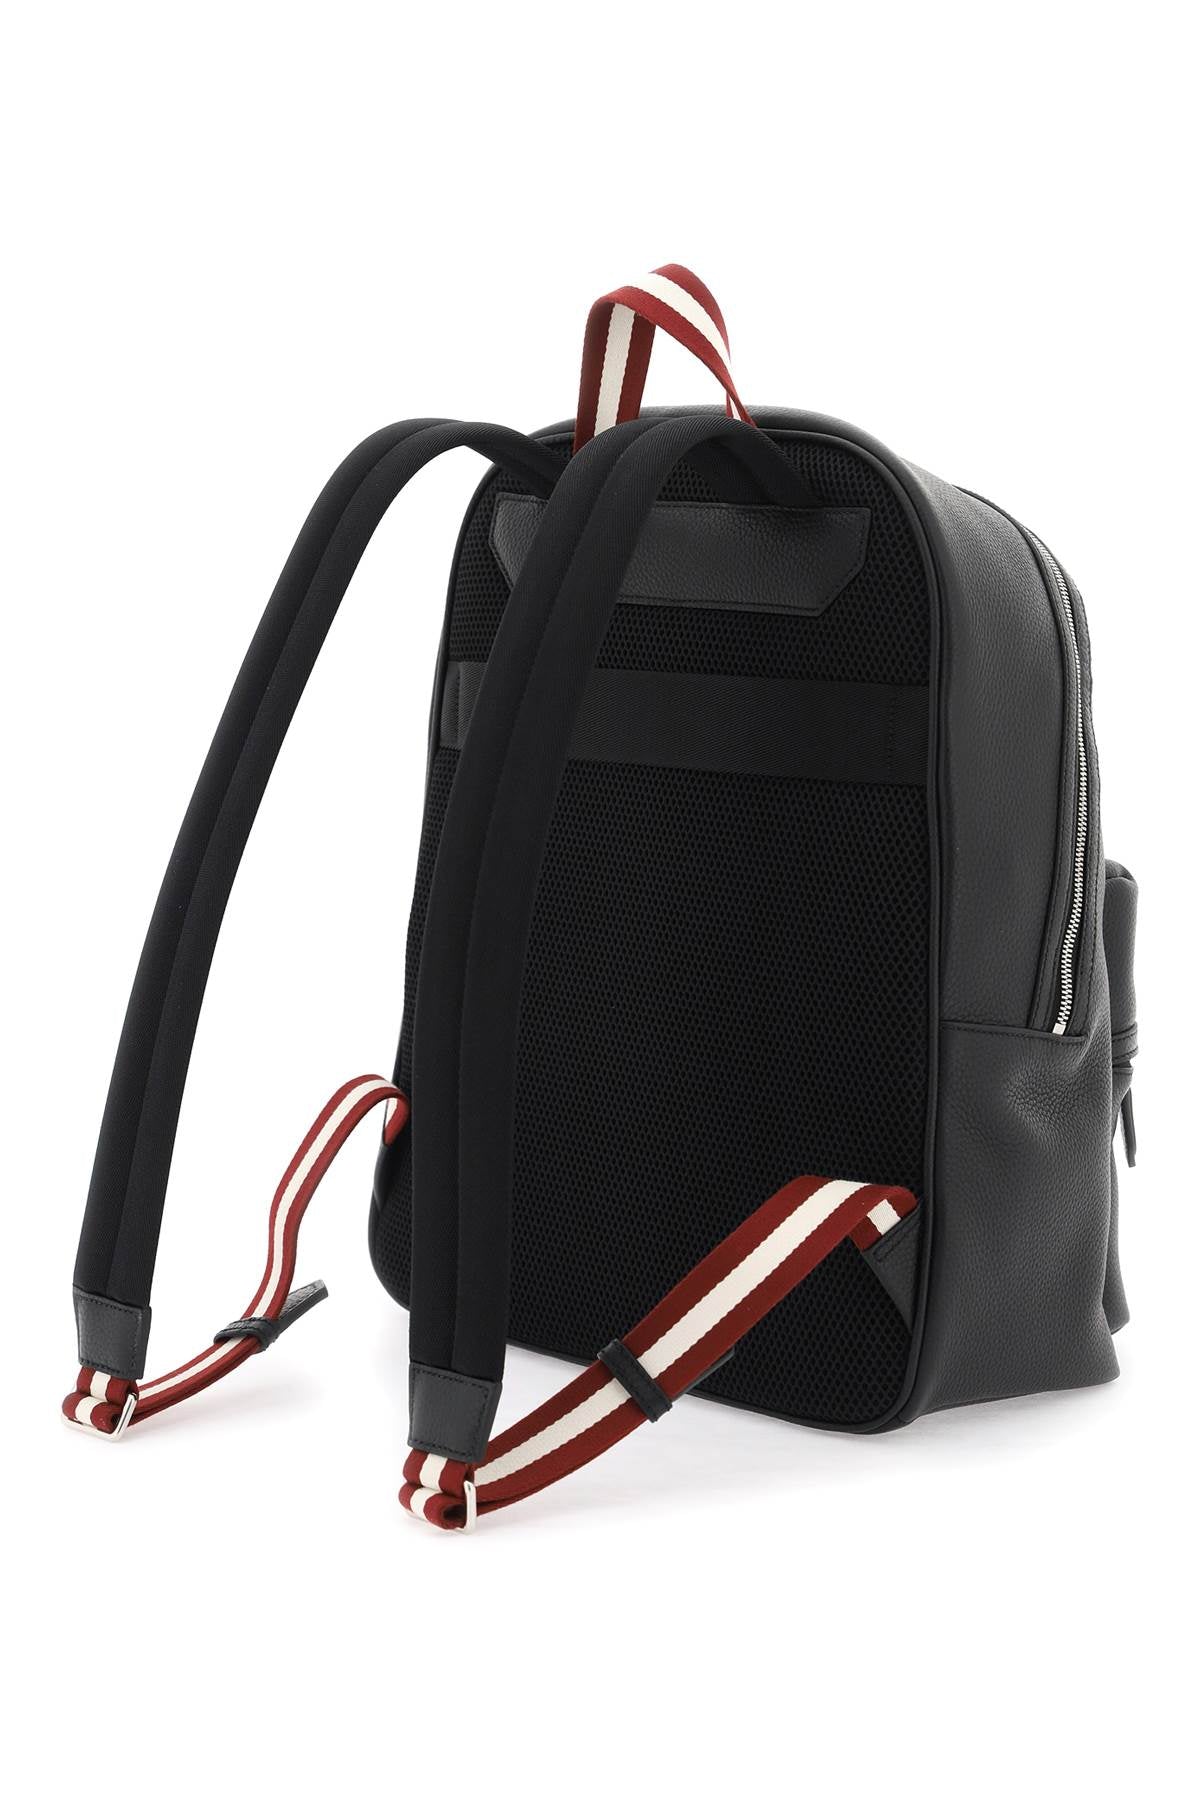 Bally code backpack-1